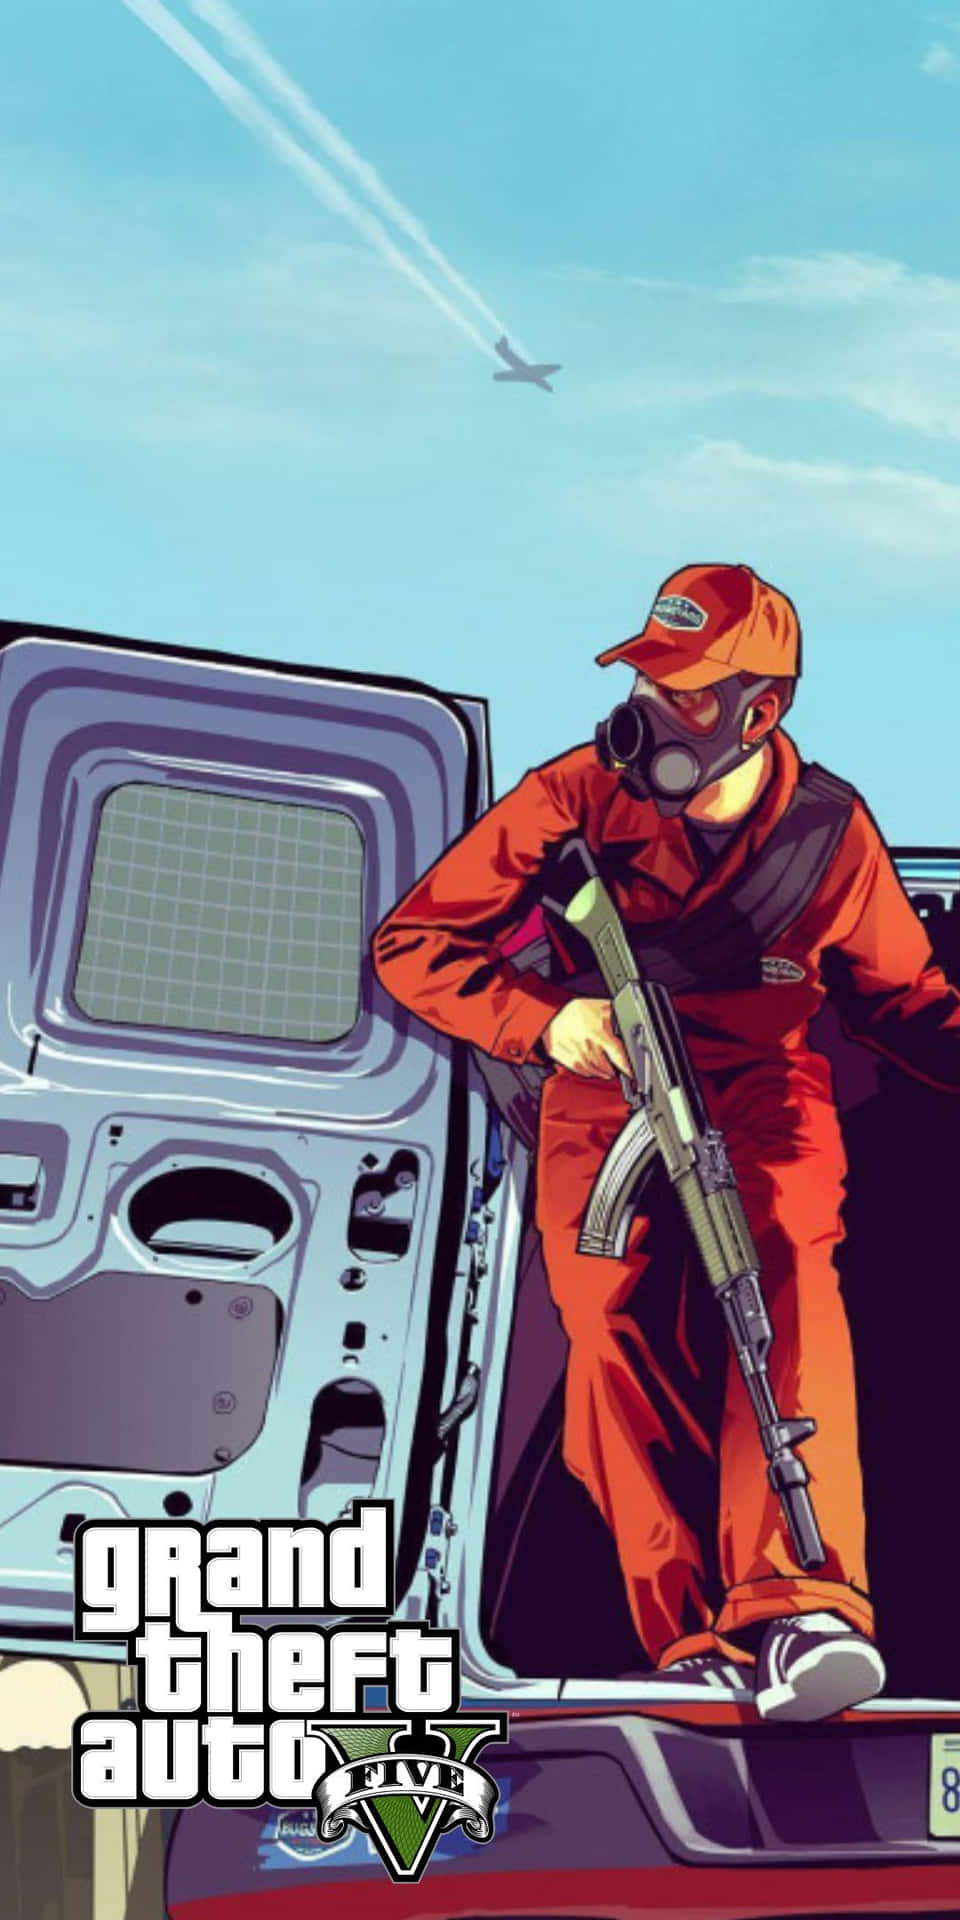 Pixel3 Grand Theft Auto V Bakgrundsbild.